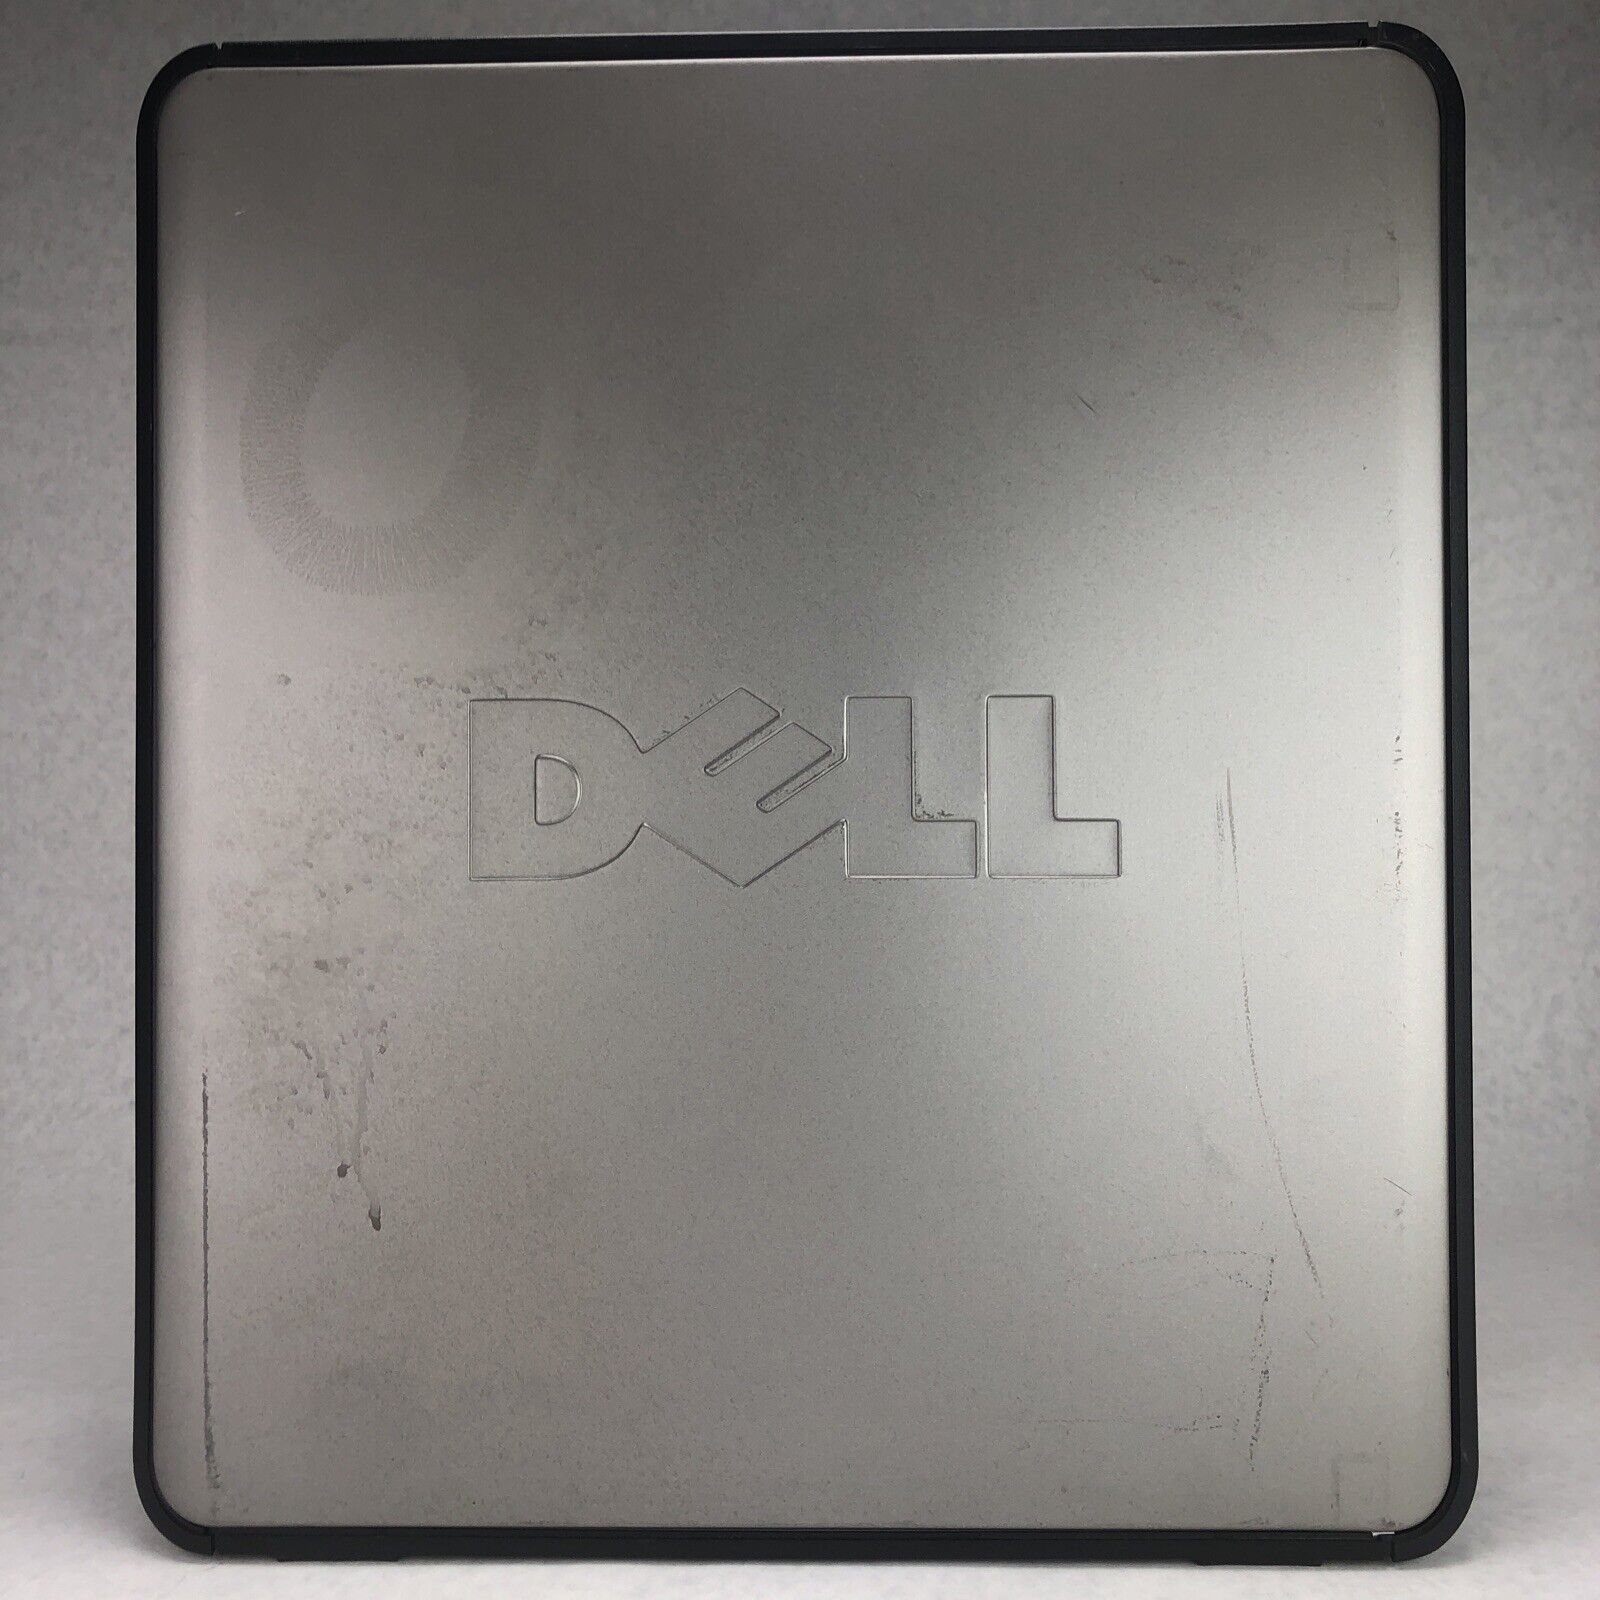 Dell OptiPlex 360 SFF Intel Celeron 450 2.20GHz CPU 2GB RAM NO HDD NO OS